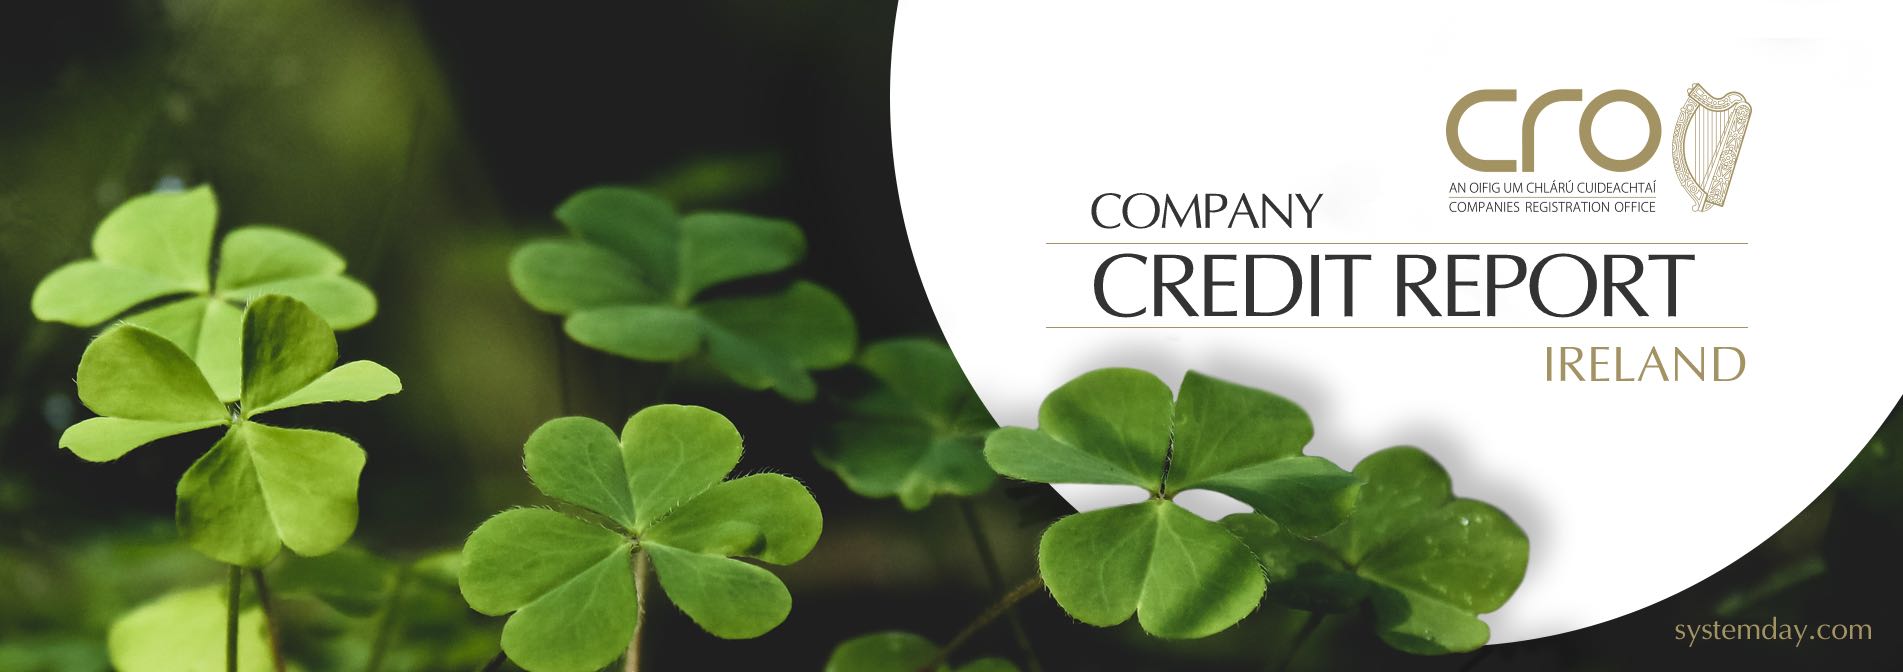 Ireland Company Credit Report